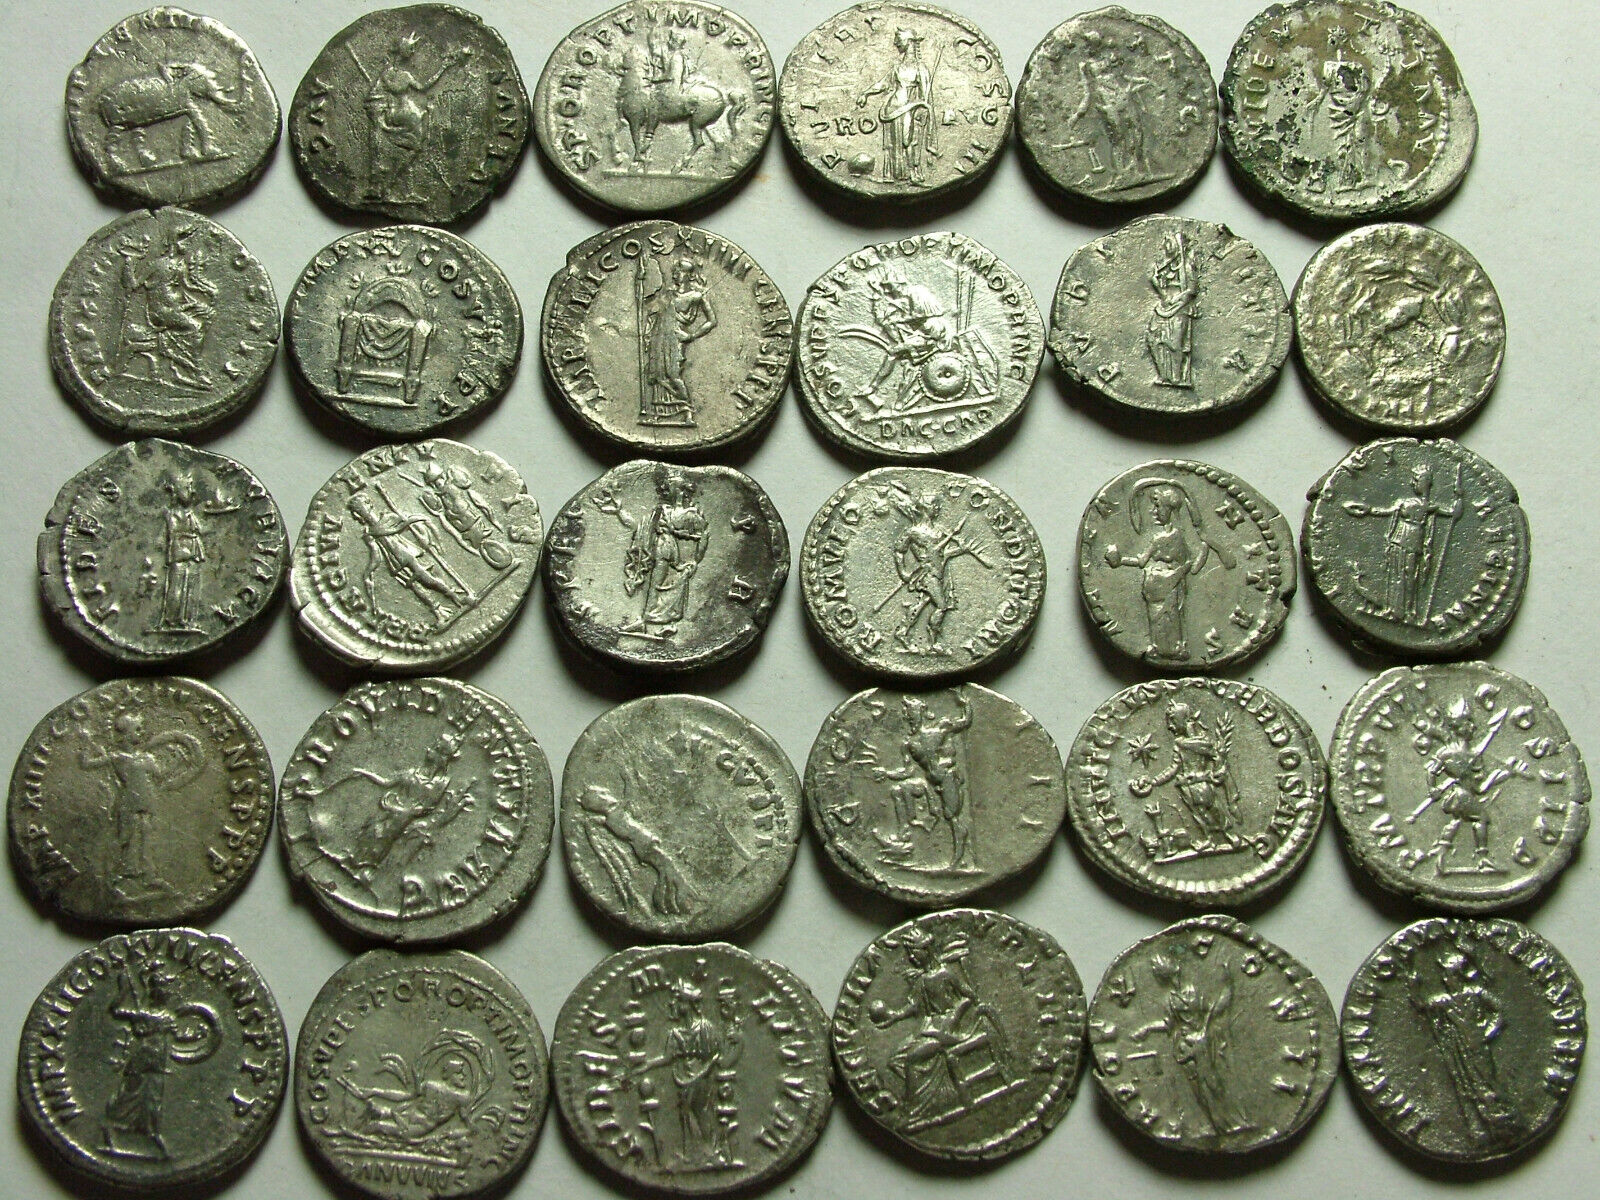 1 original Ancient Roman SILVER coin Denarius Trajan Faustina Hadrian Domitian Без бренда - фотография #5